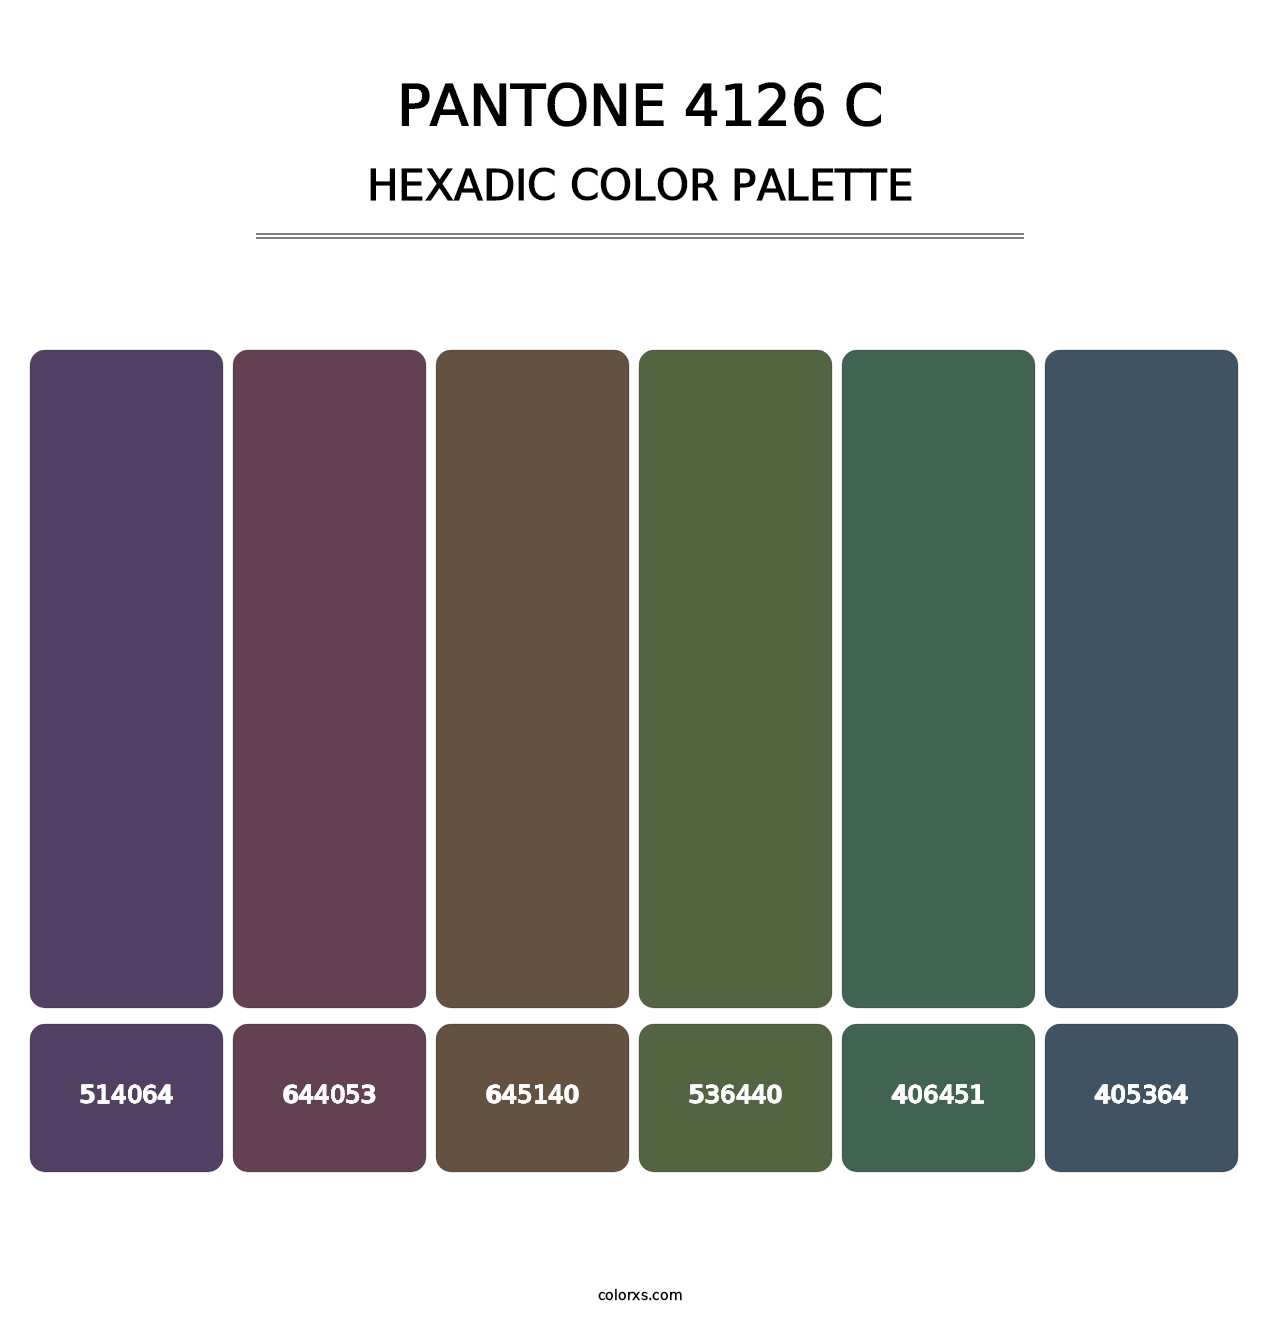 PANTONE 4126 C - Hexadic Color Palette